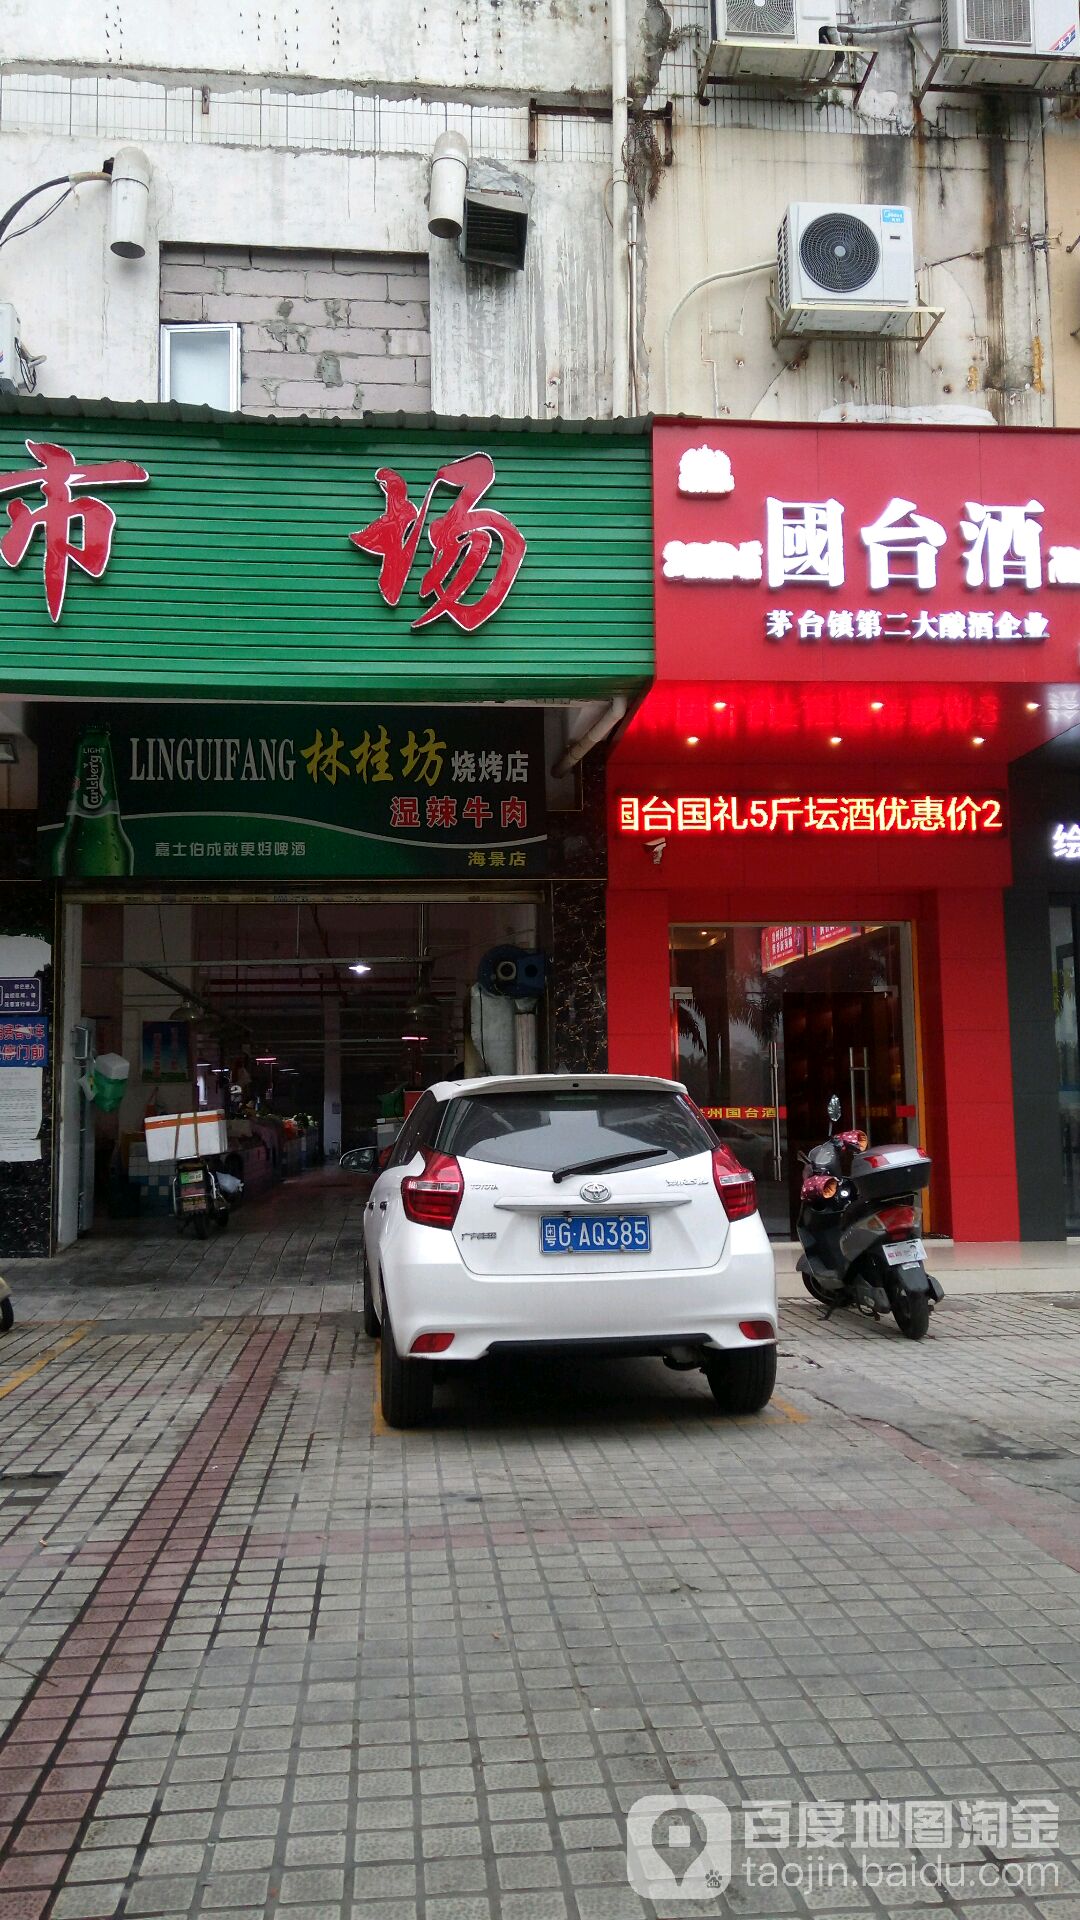 林桂坊烧烤店